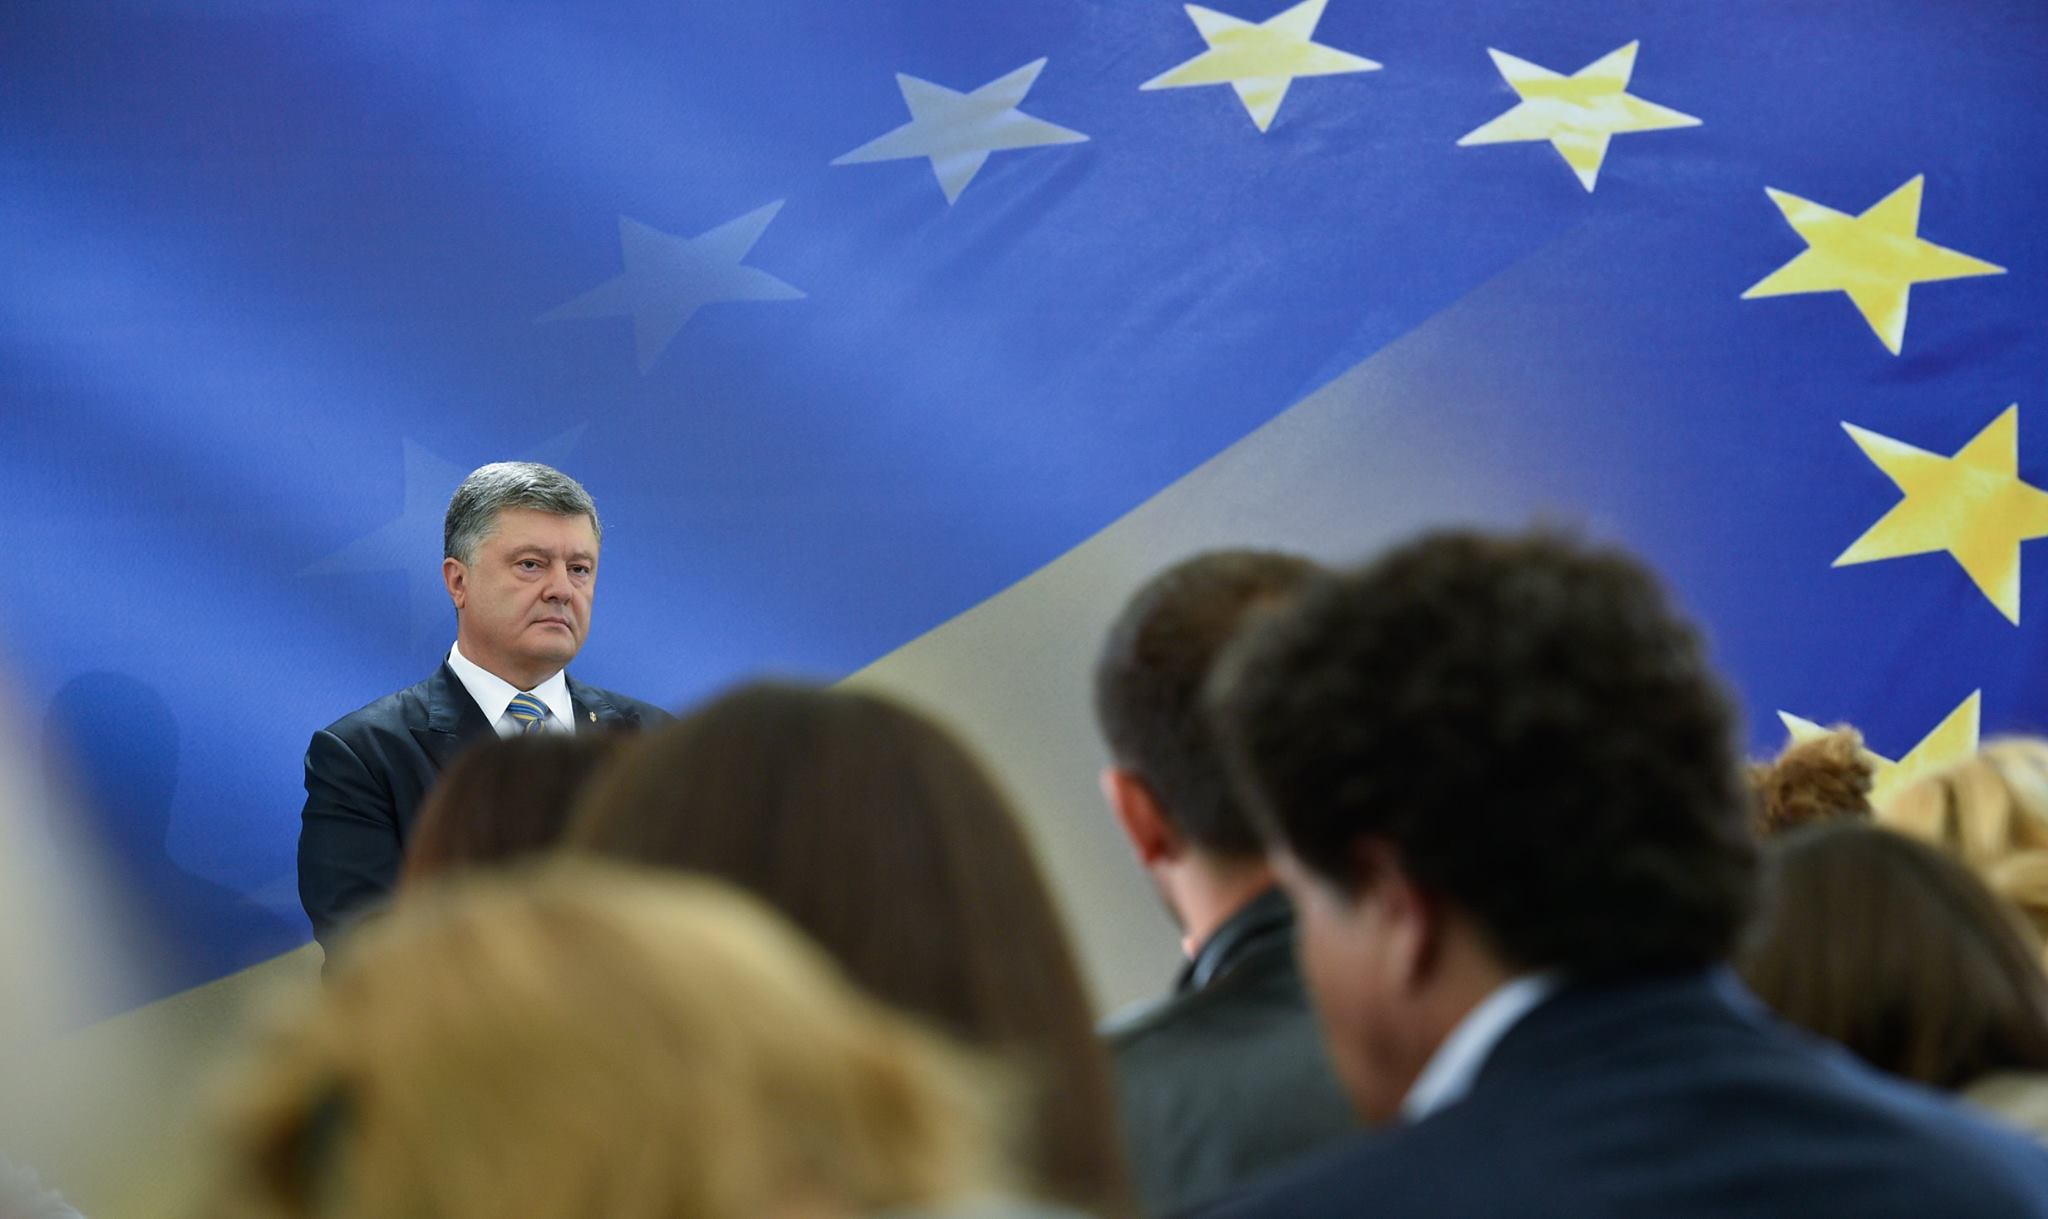 What was Poroshenko speaking about?